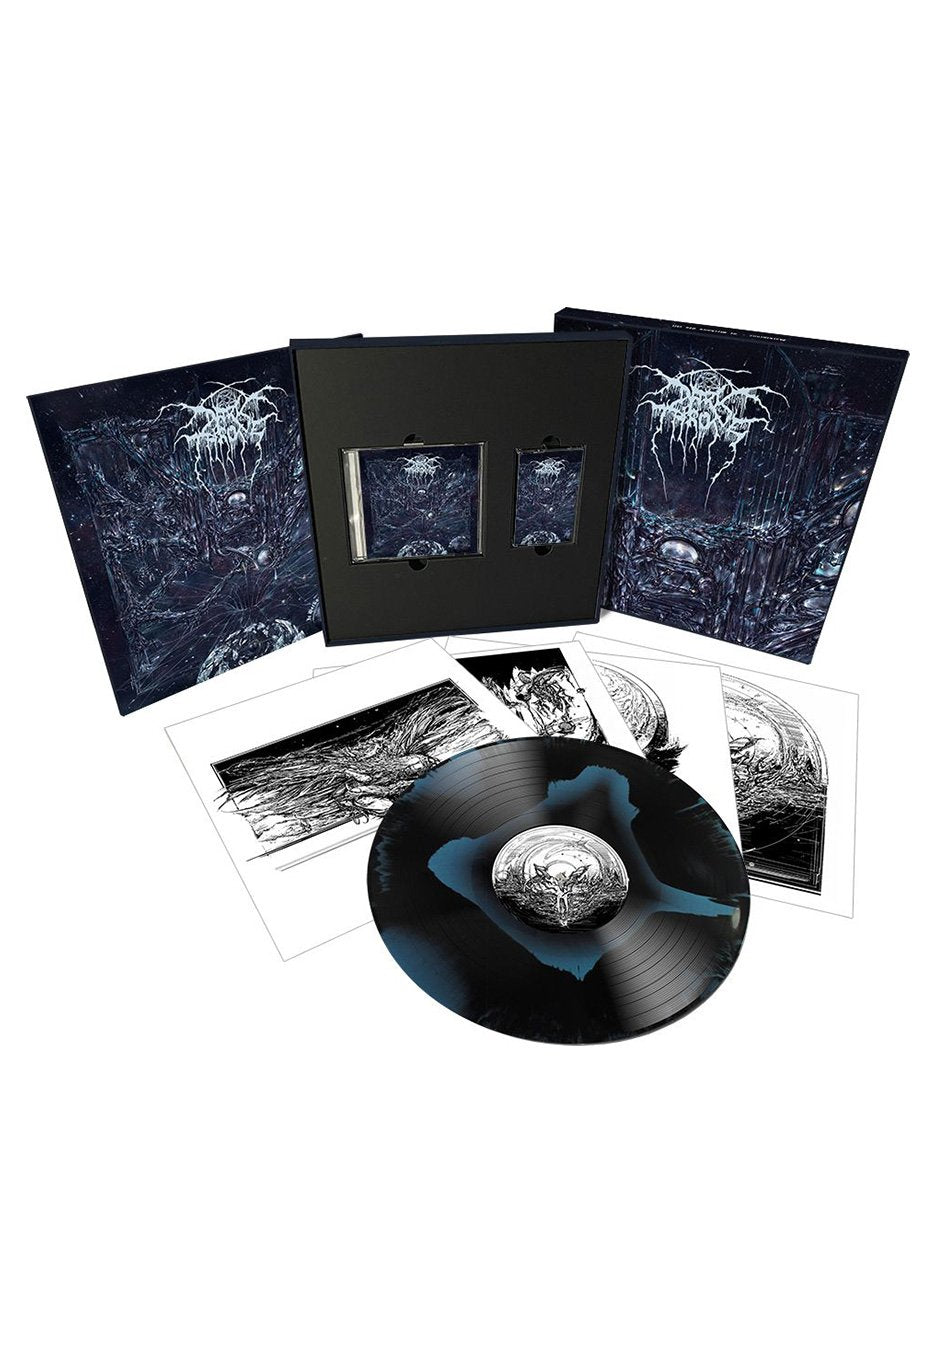 Darkthrone - It Beckons Us All Ltd. Deluxe Edition - LP Box Set